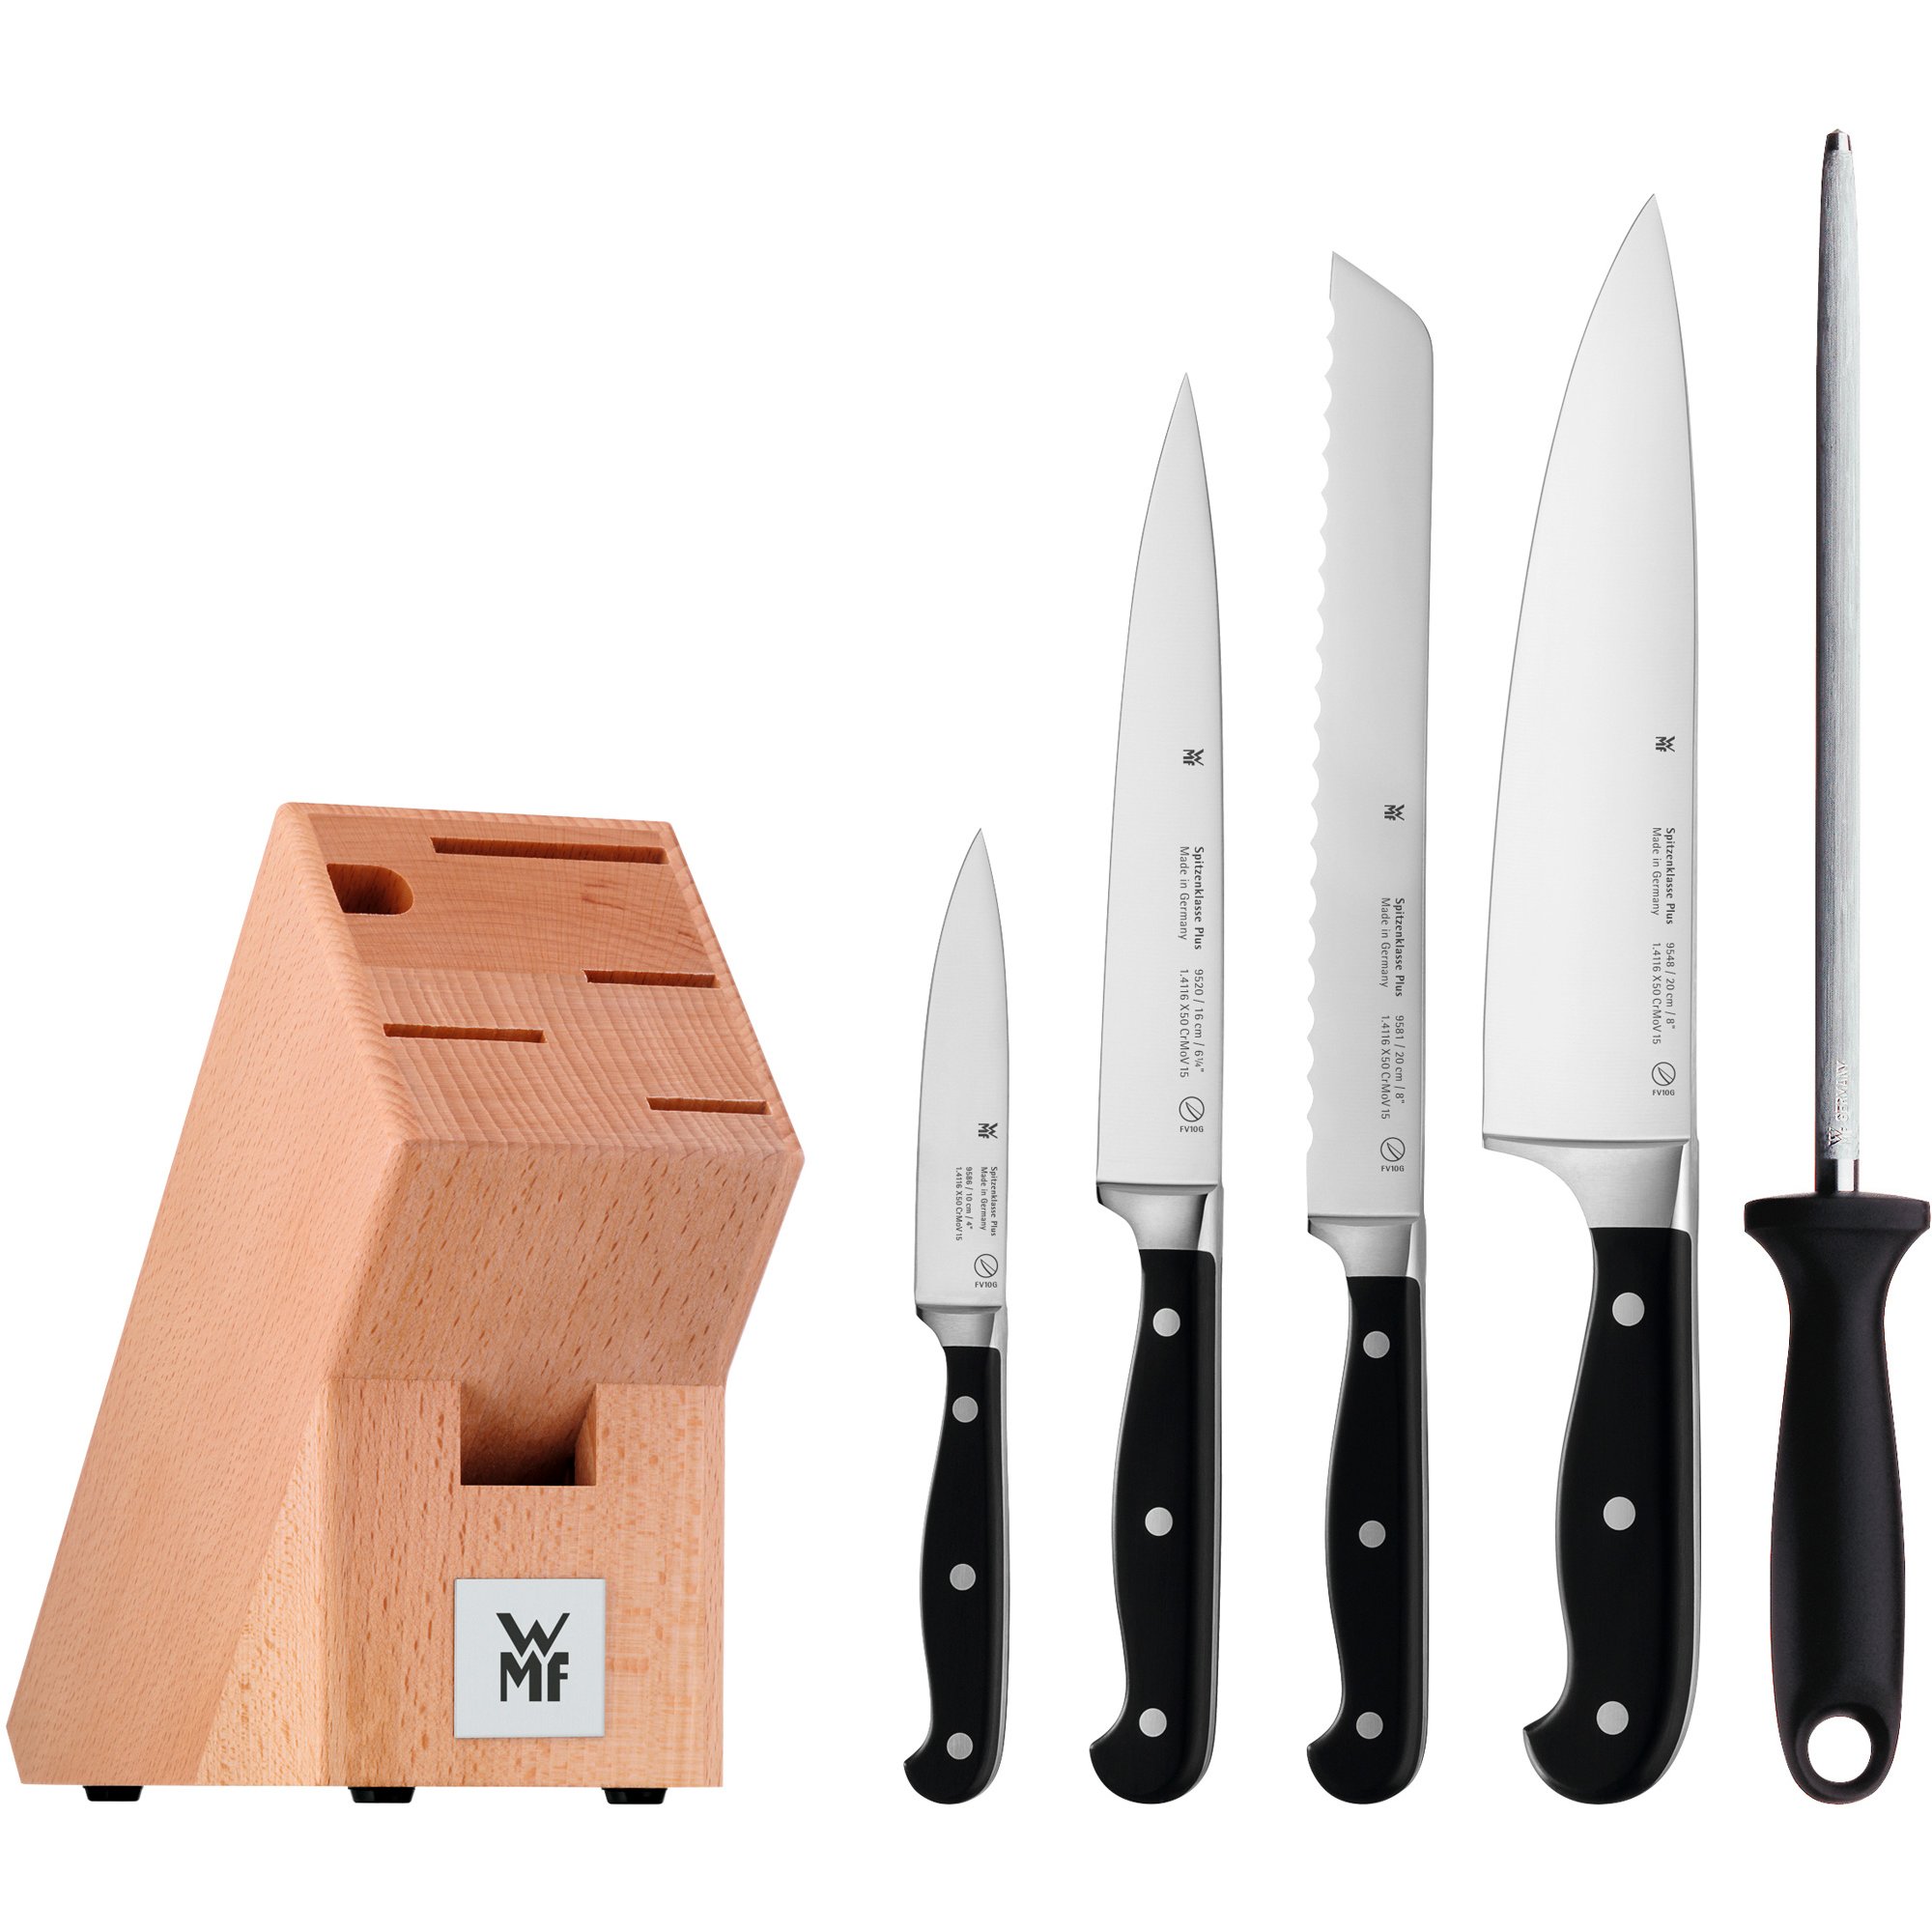 WMF Spitzenklasse Plus Knivset med knivblock